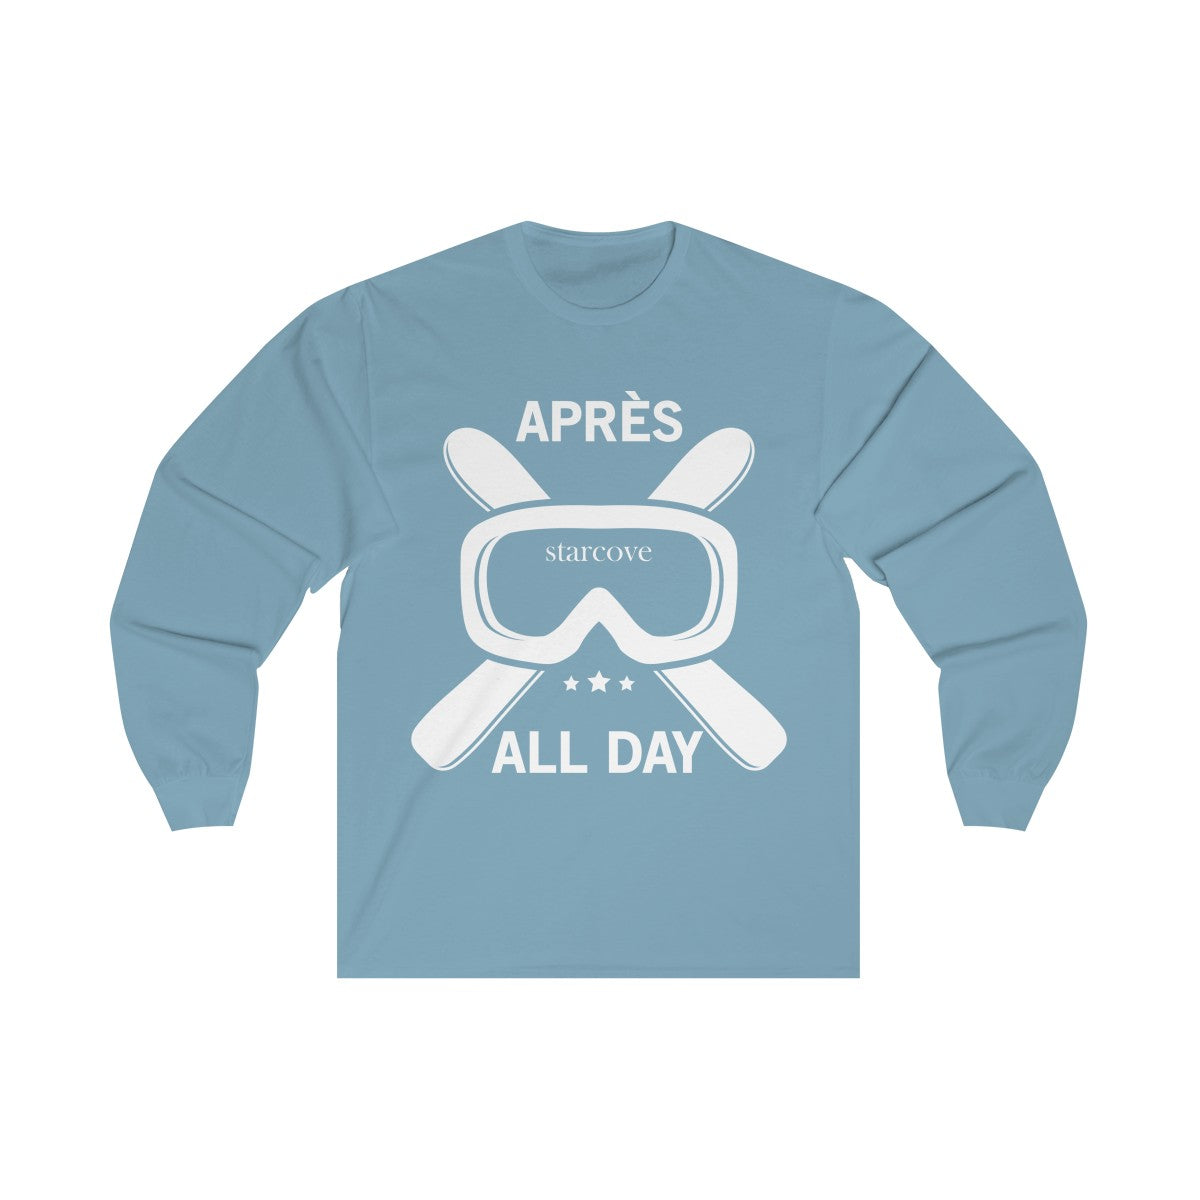 Apres All Day Shirt, Ski Skiing Snow Mountain Ski Mask Slopes Winter Party Wear Resort, Gifts Long Sleeve Tshirt Tee Starcove Fashion